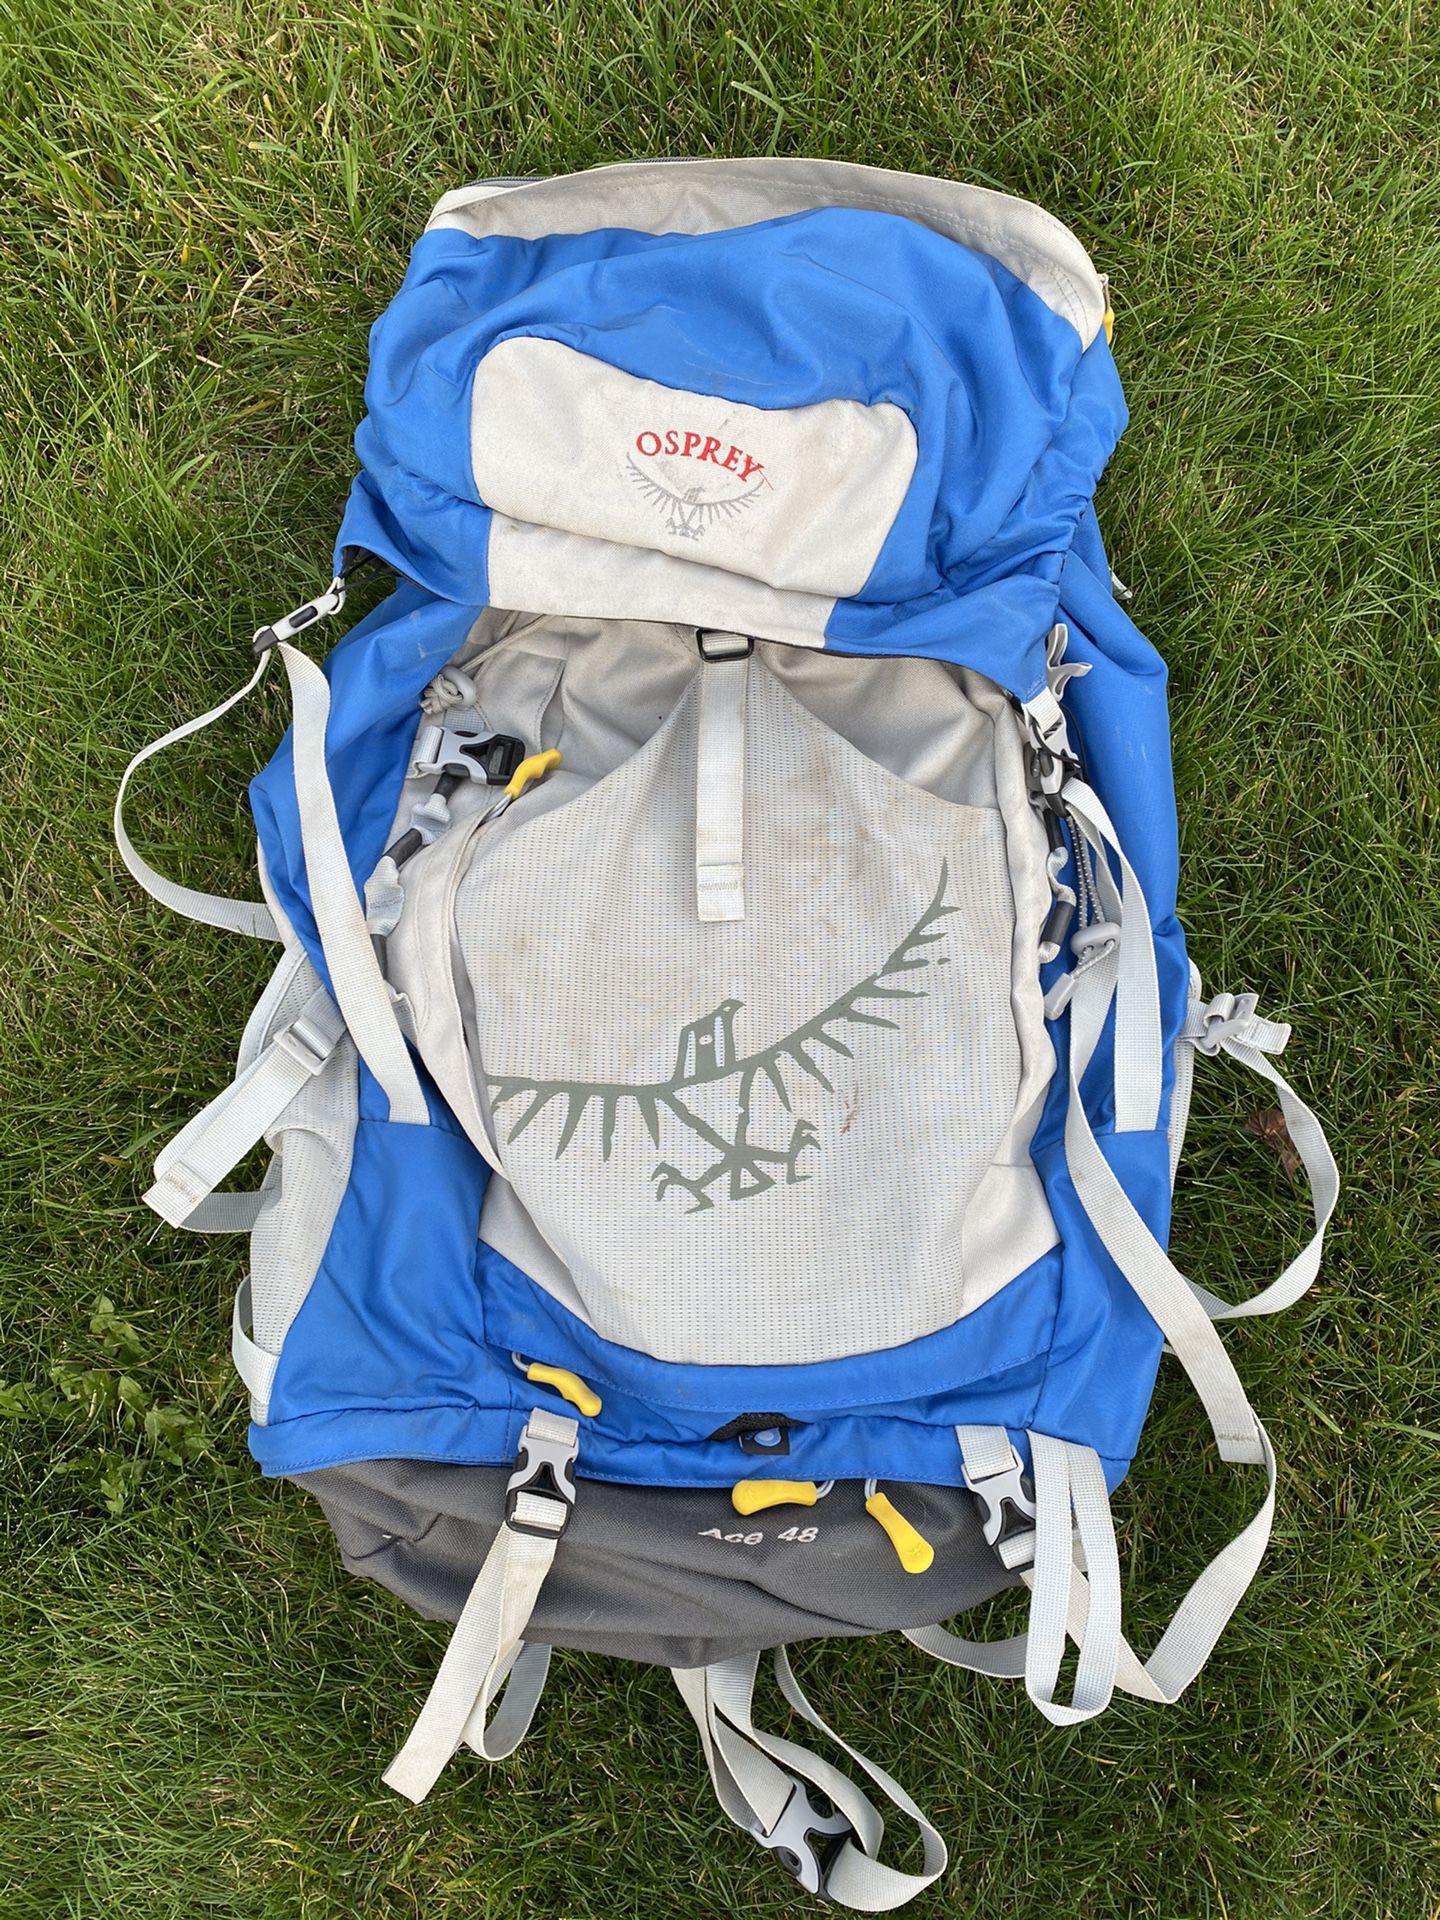 Osprey Ace 48 Hiking Internal Frame Camping Backpack